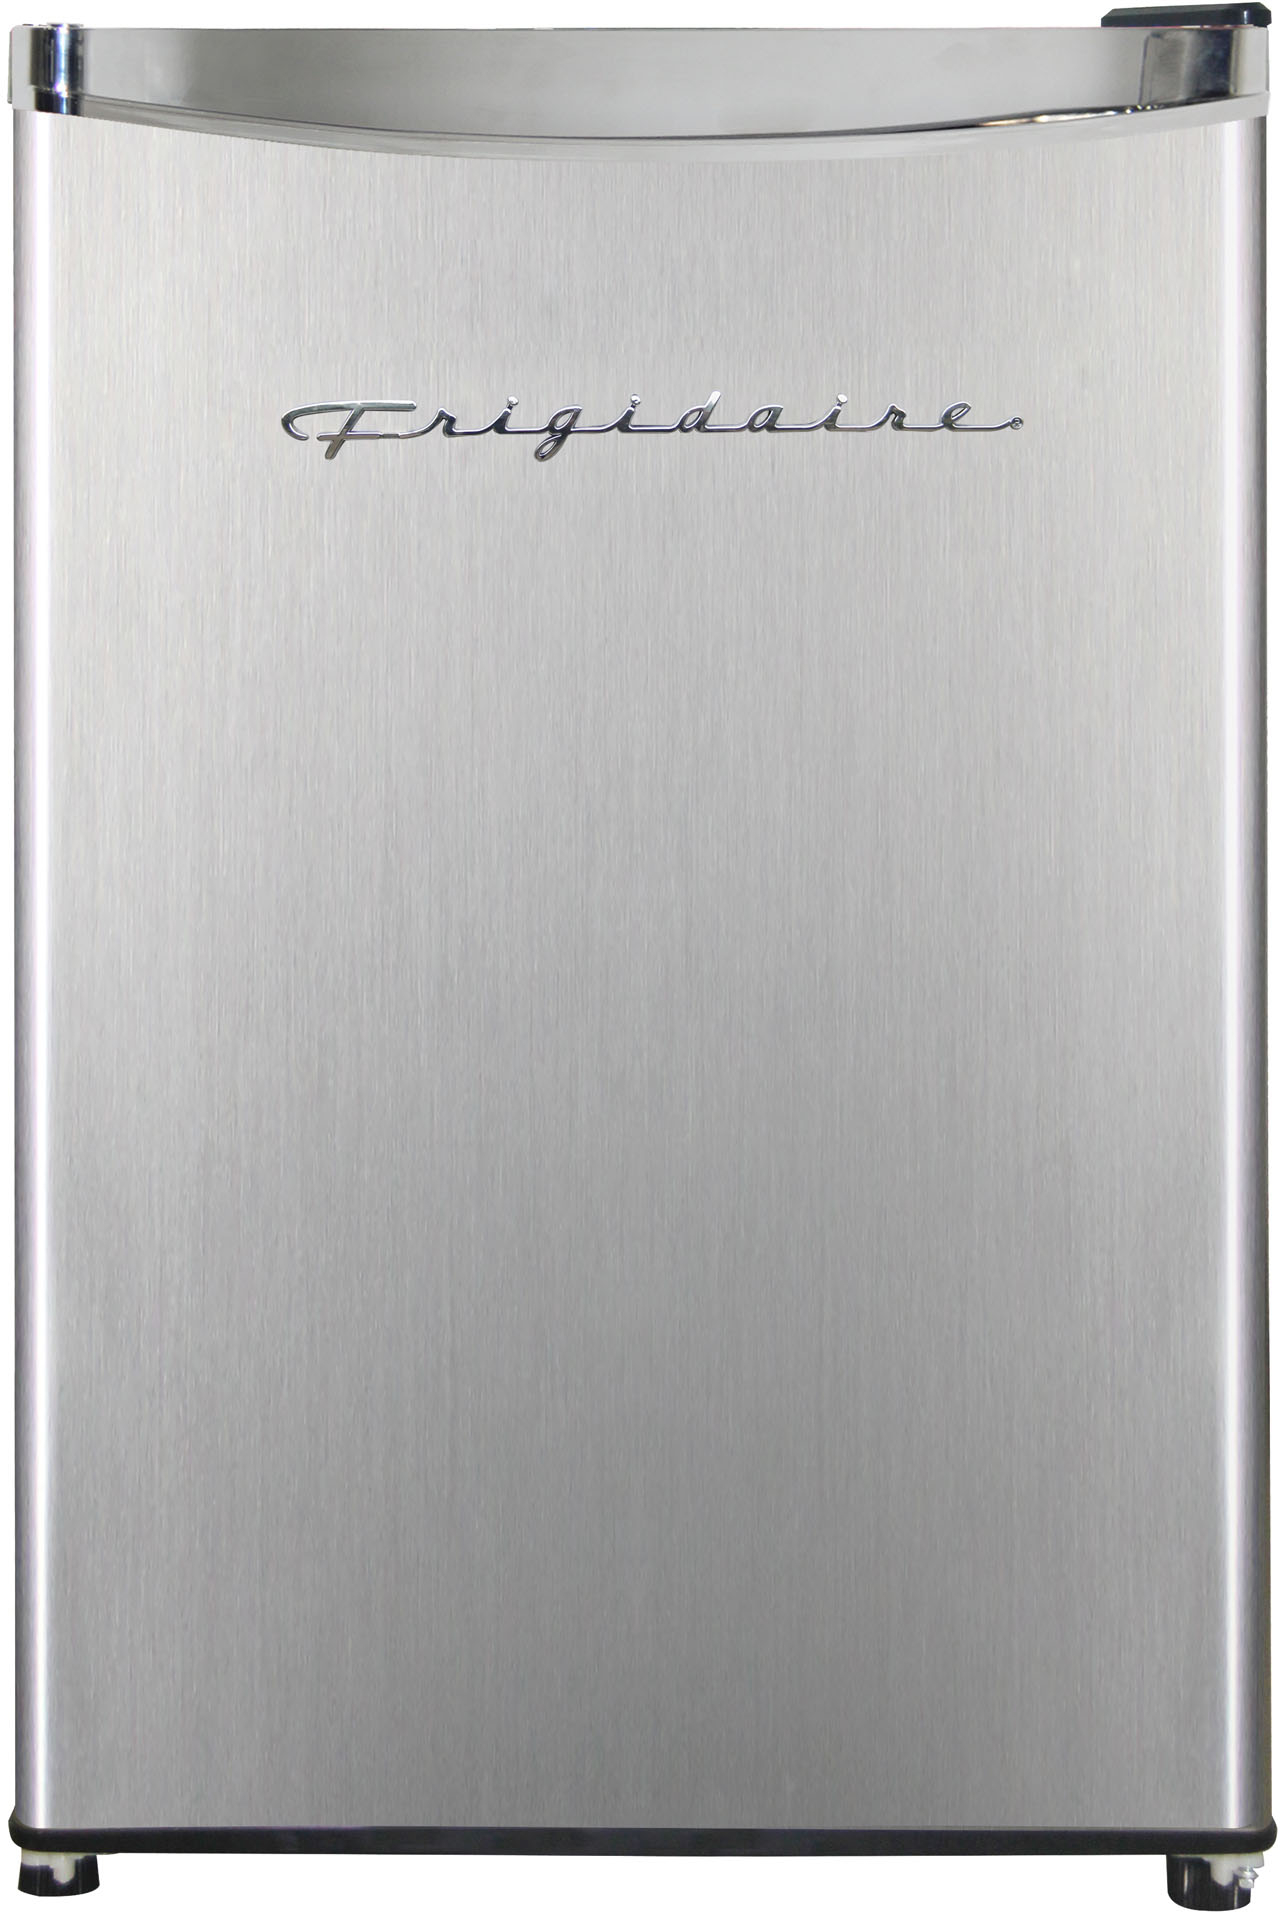 Frigidaire Platinum Series Retro 2.8 Cu. Ft. Compact Fridge Stainless with  Chrome Trim Stainless/Chrome Trim EFR285 - Best Buy